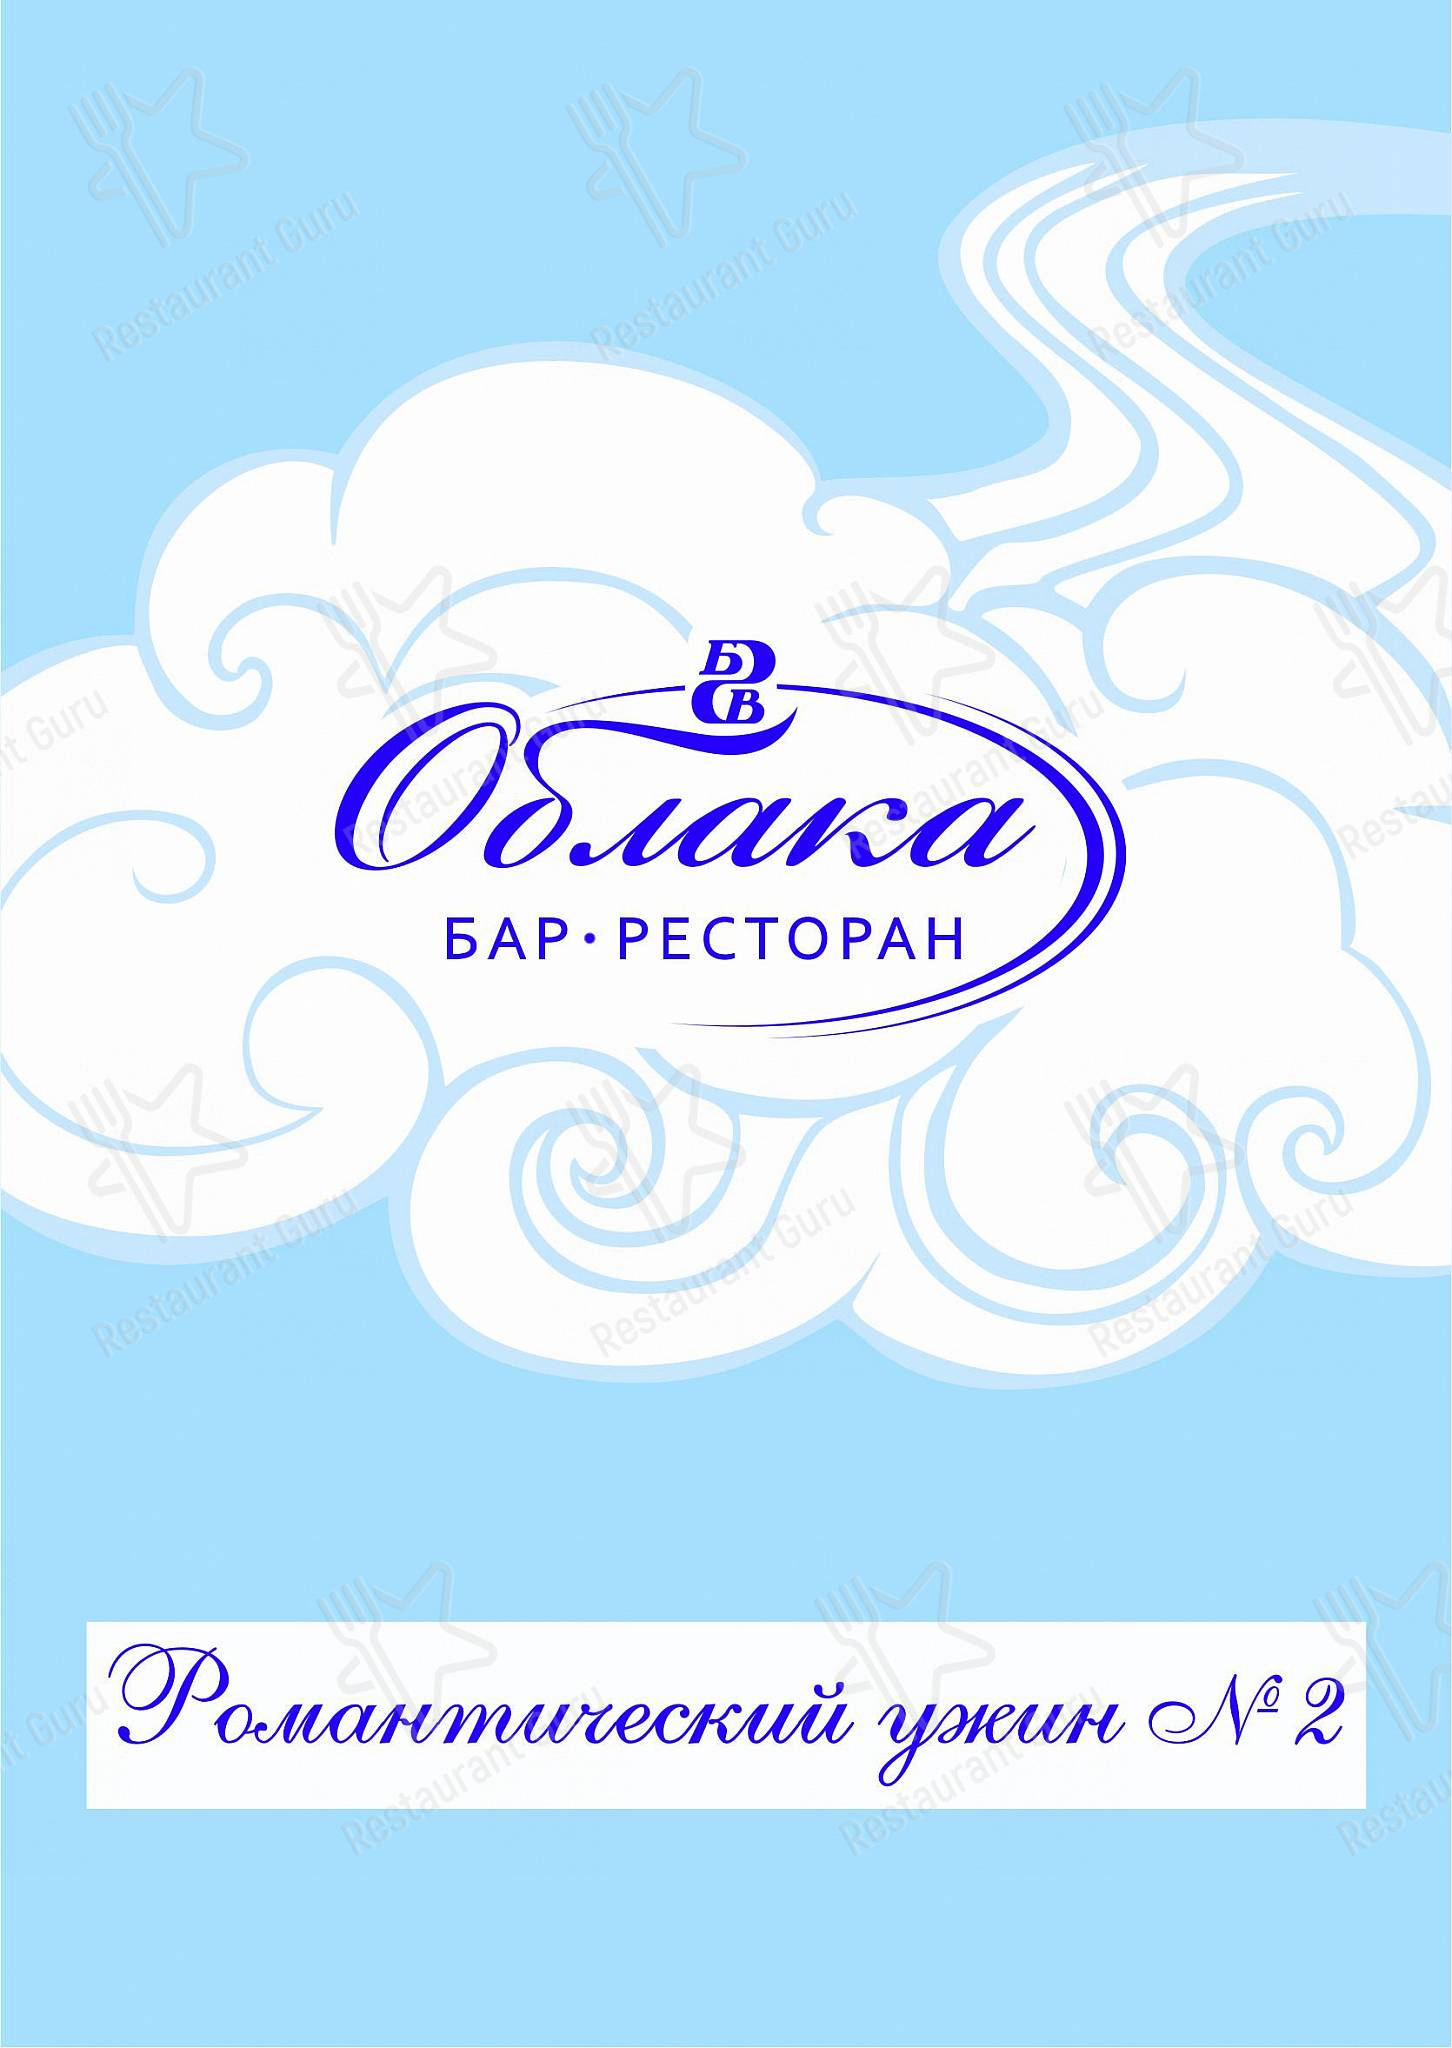 Ресторан облака челябинск. Кафе облака Челябинск. Ресторан облака Челябинск бассейн.